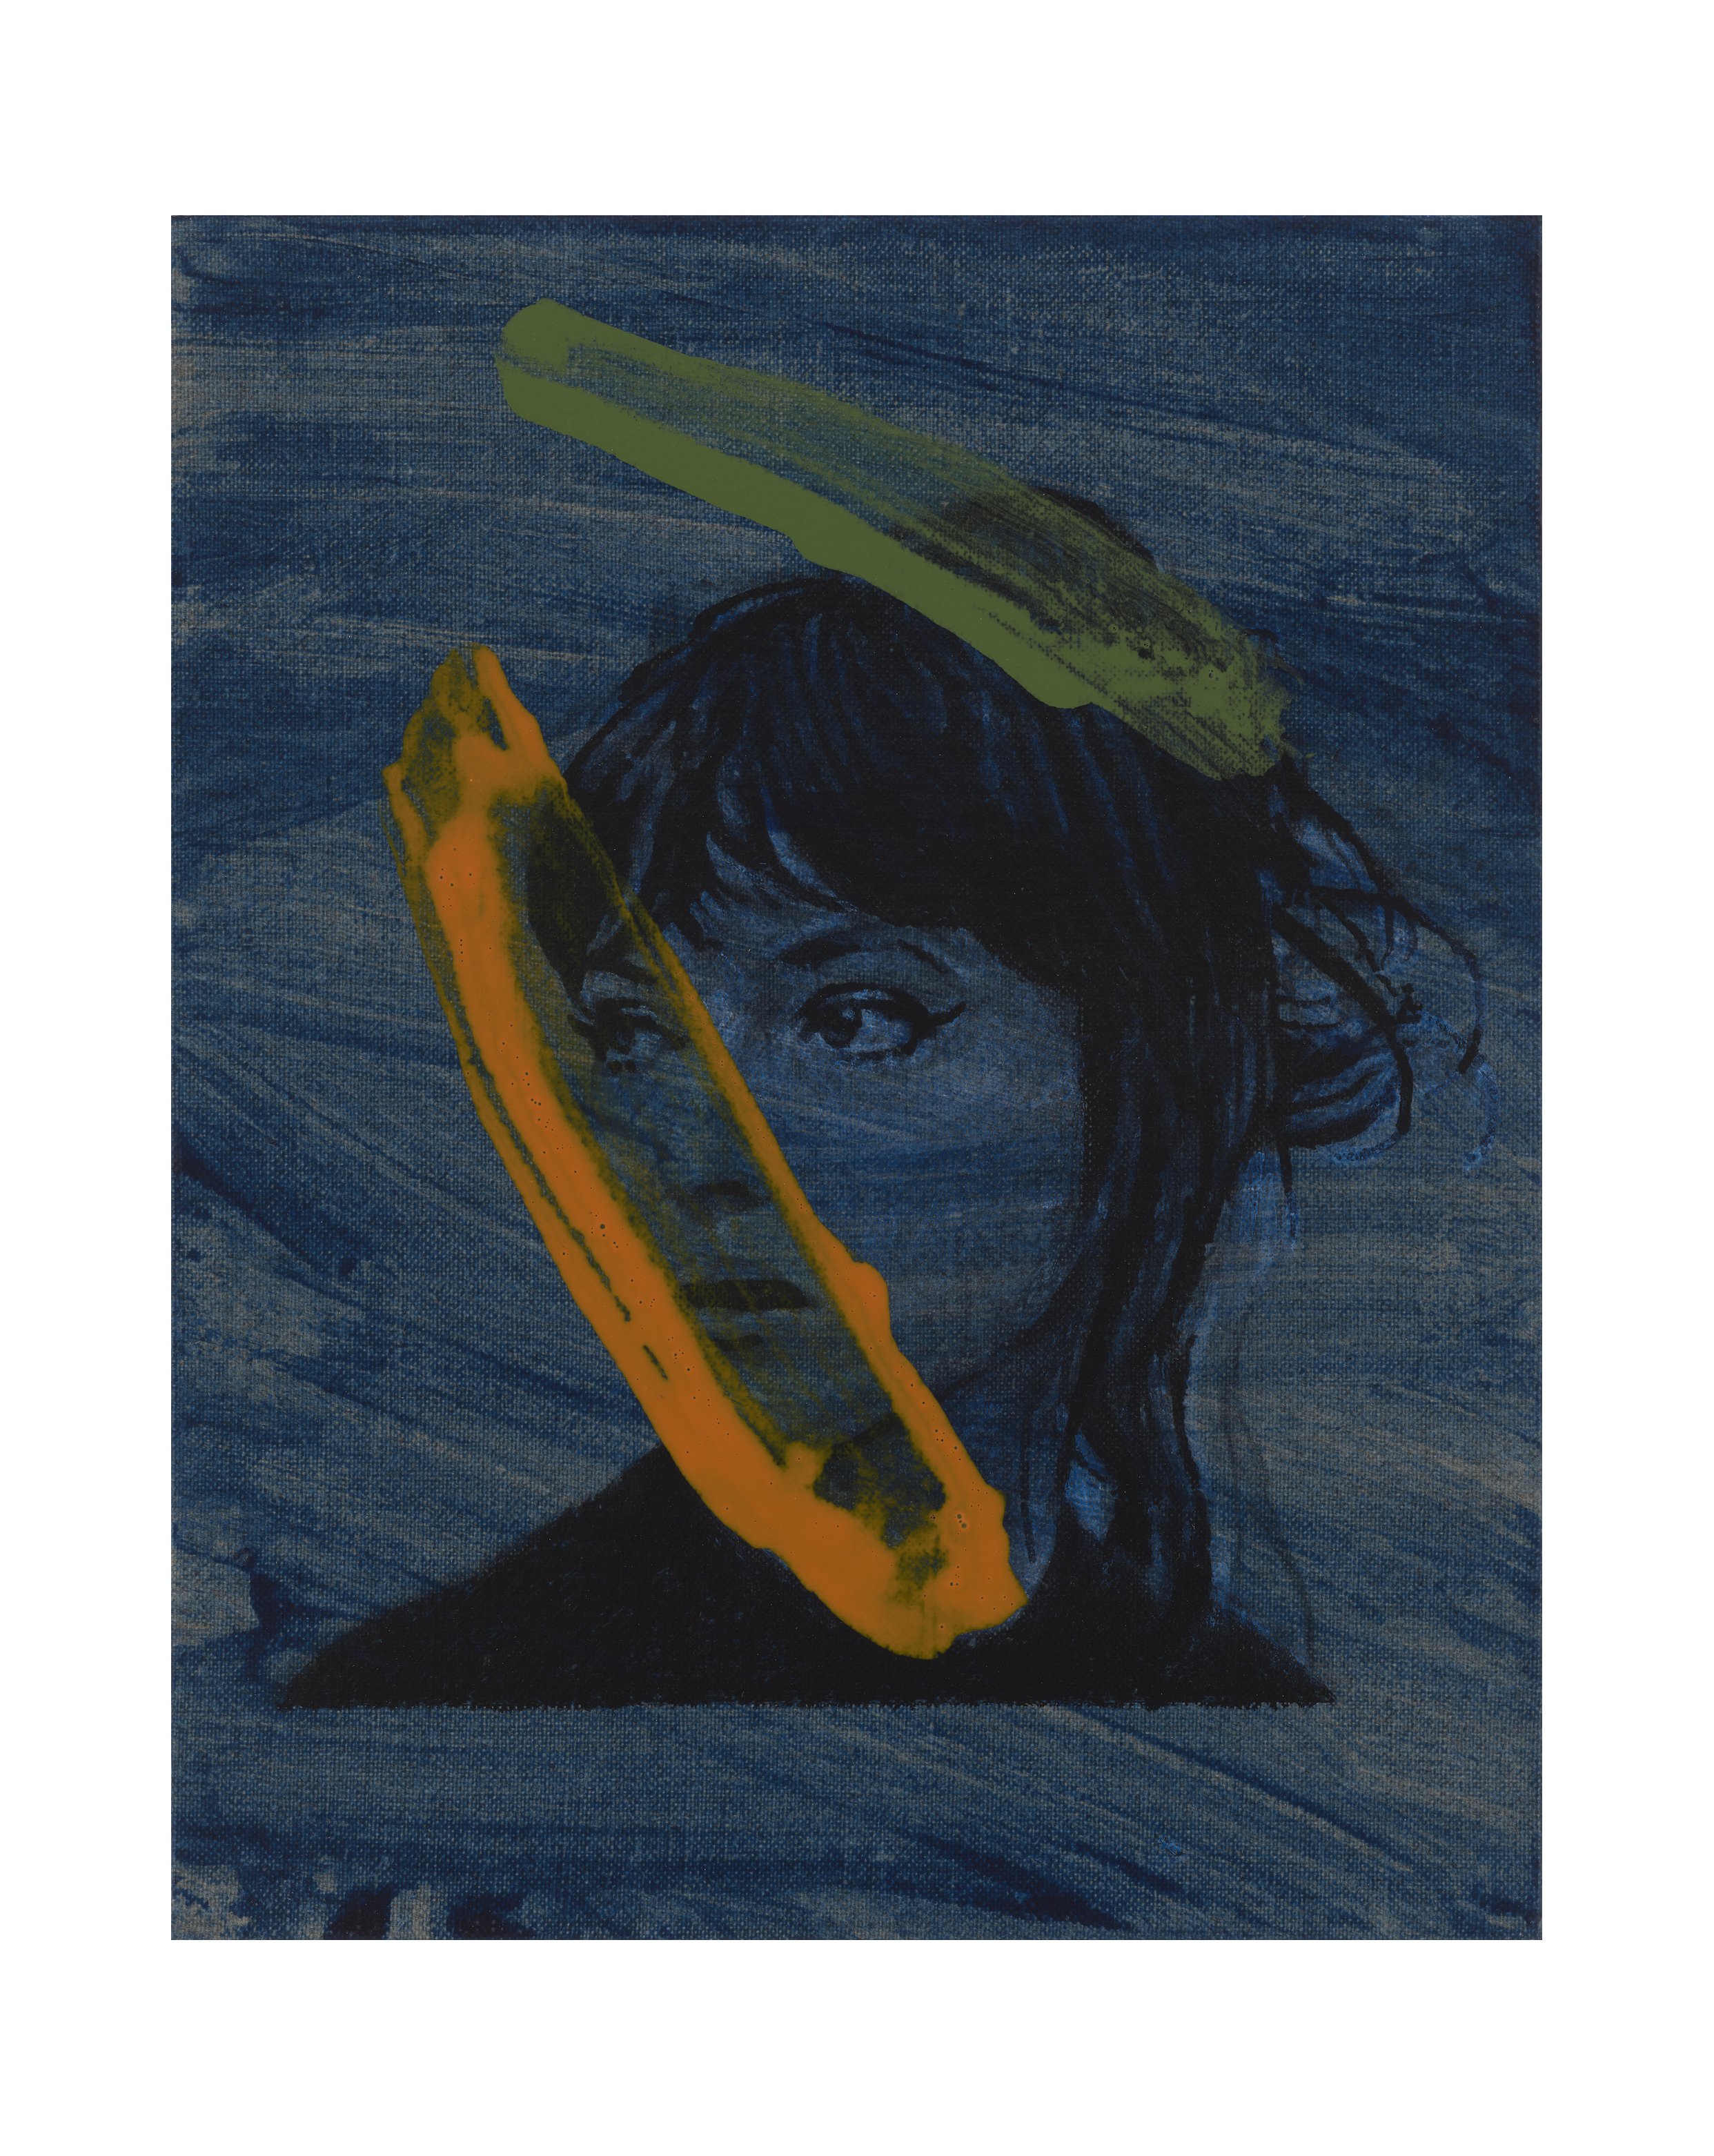   Anna Karina / Godard, une femme est une femme, 1961   10 x 8, ink and acrylic on linen, 2022 